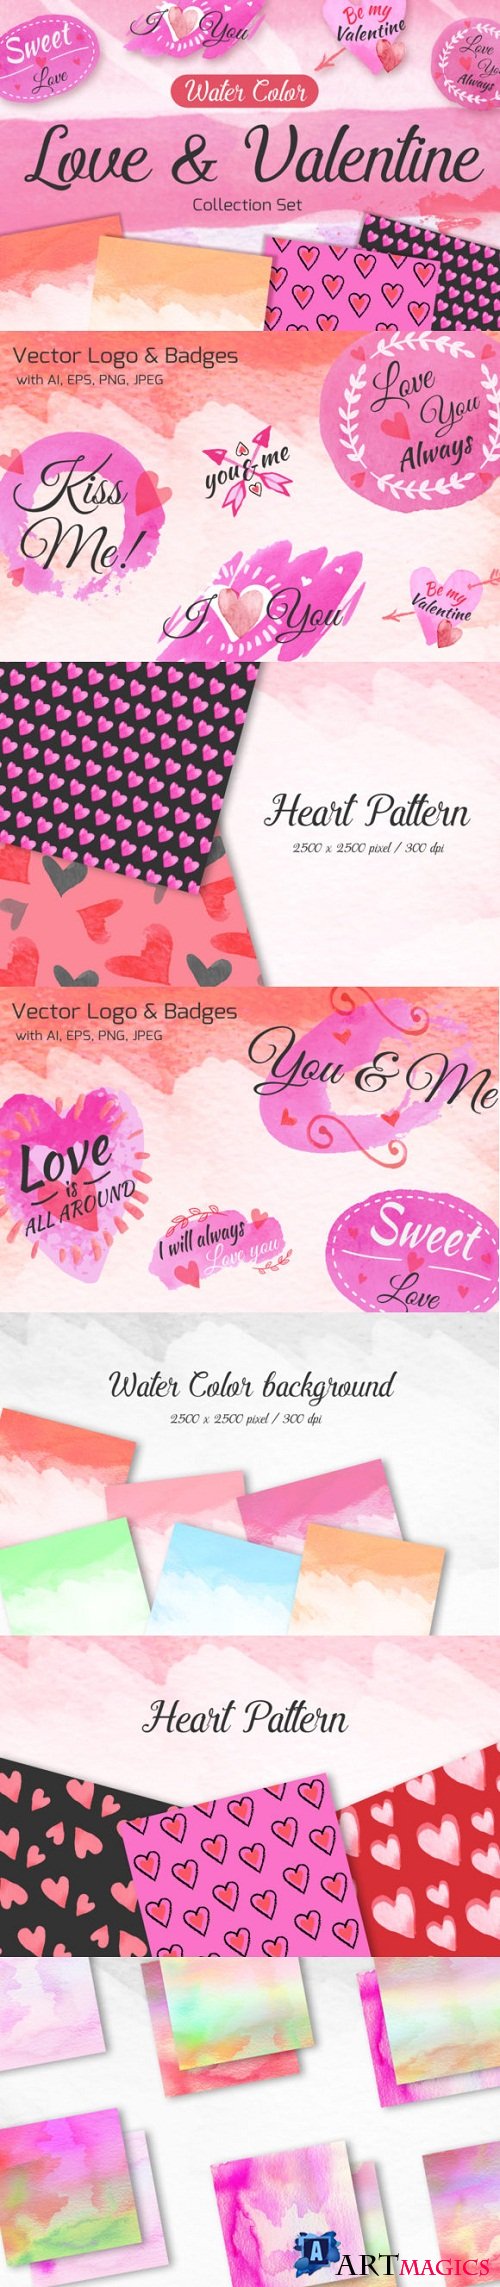 Love & Valentine collection set